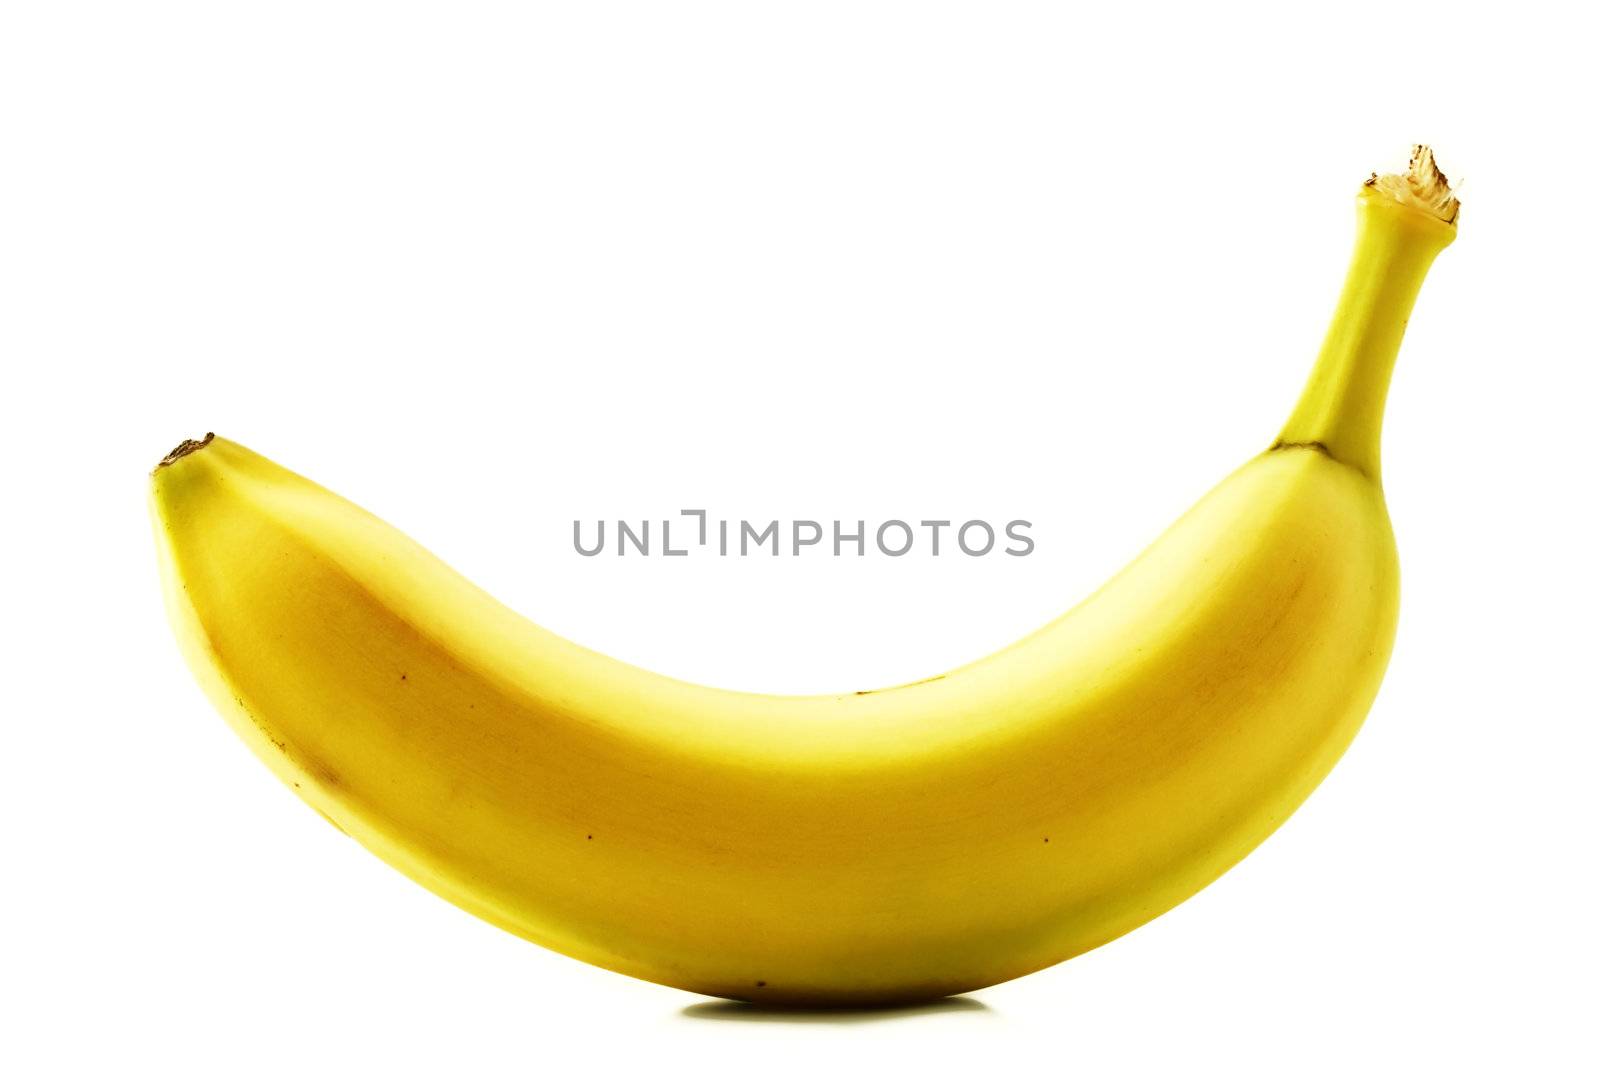 one yellow banana isolated on white background